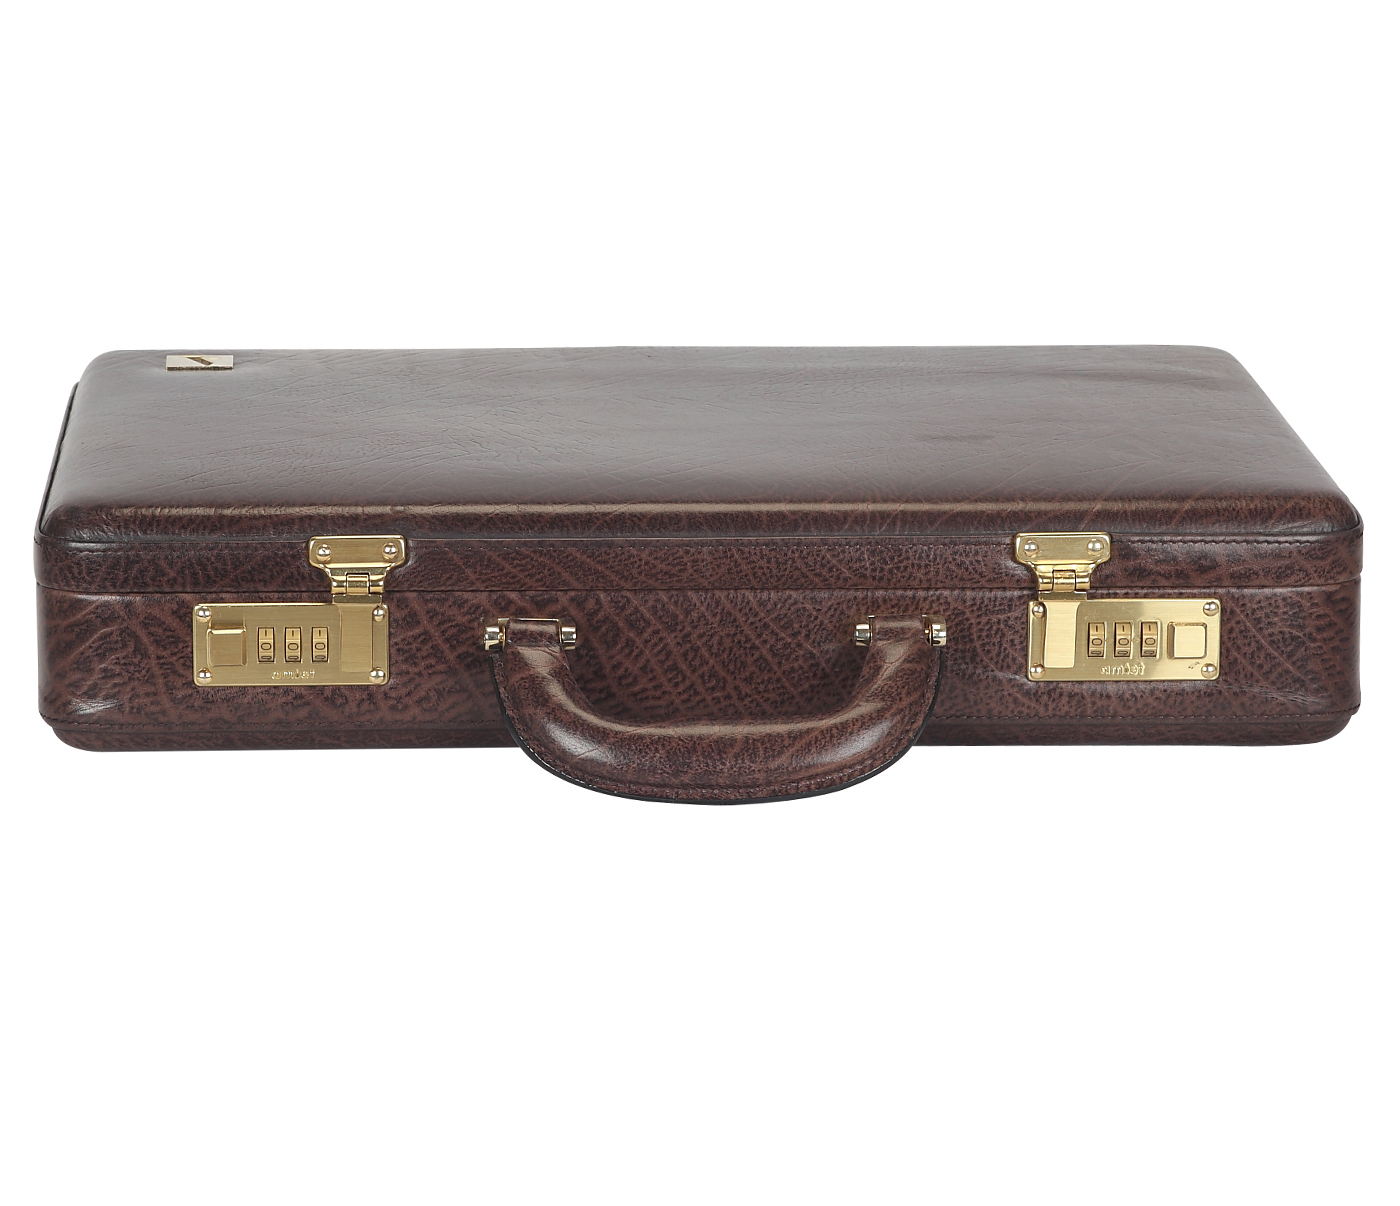 Briefcase / Attache's--Briefcase hard top in Genuine Leather - Brown